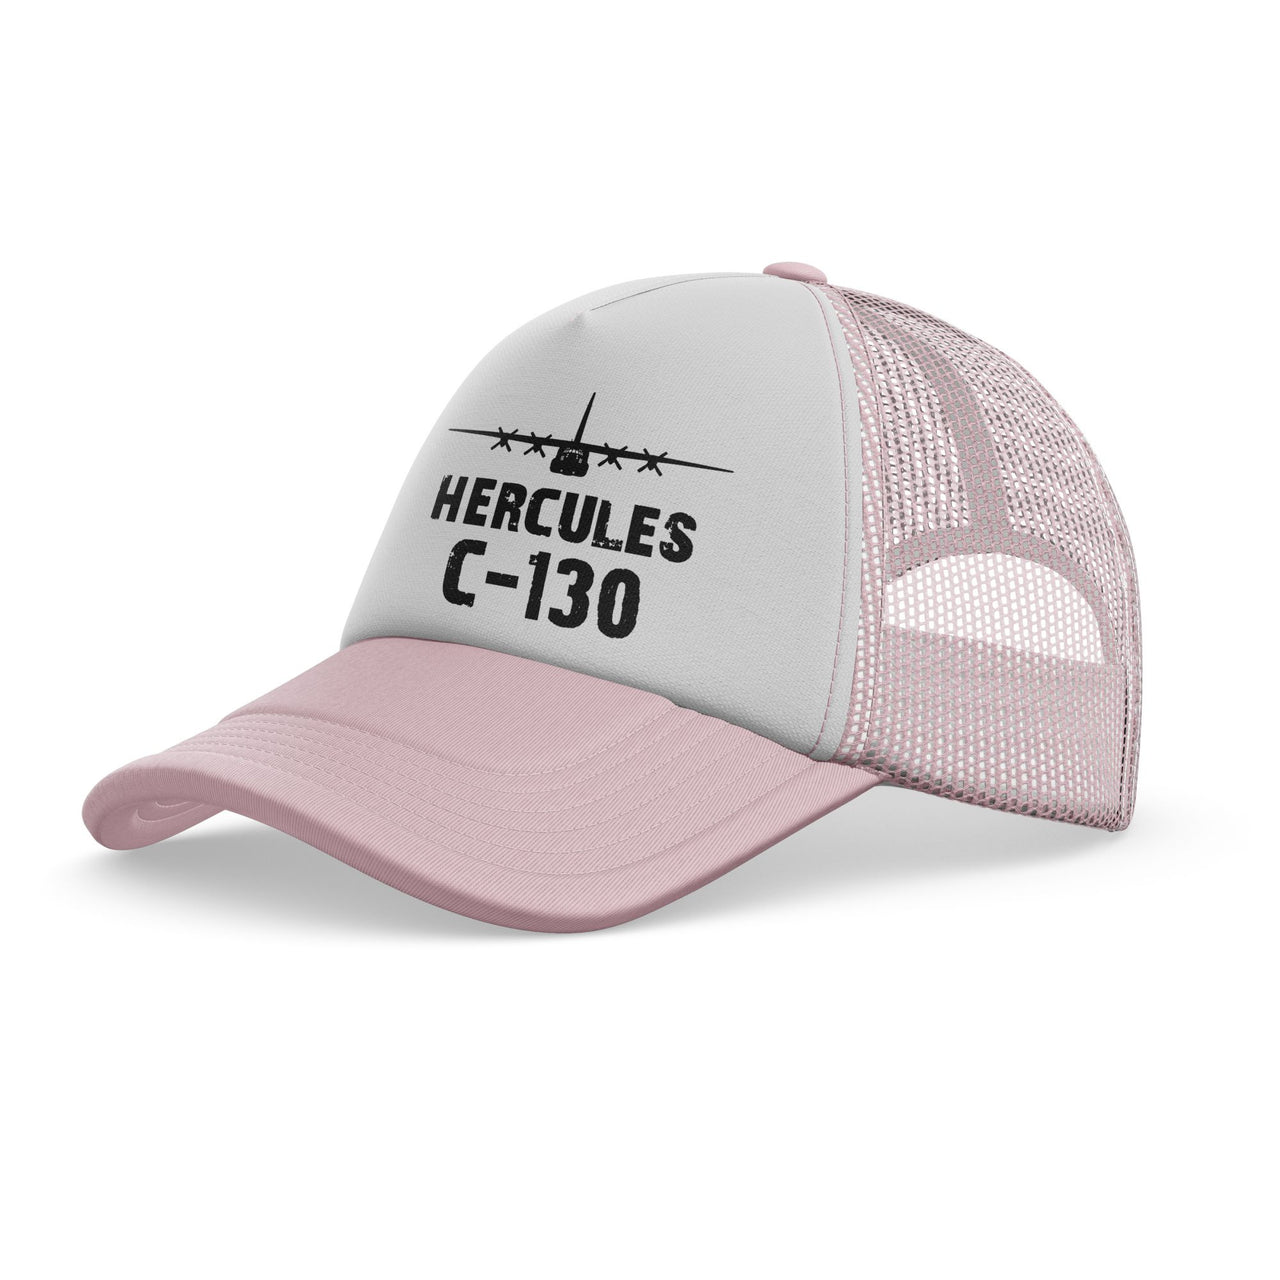 Hercules C-130 & Plane Designed Trucker Caps & Hats